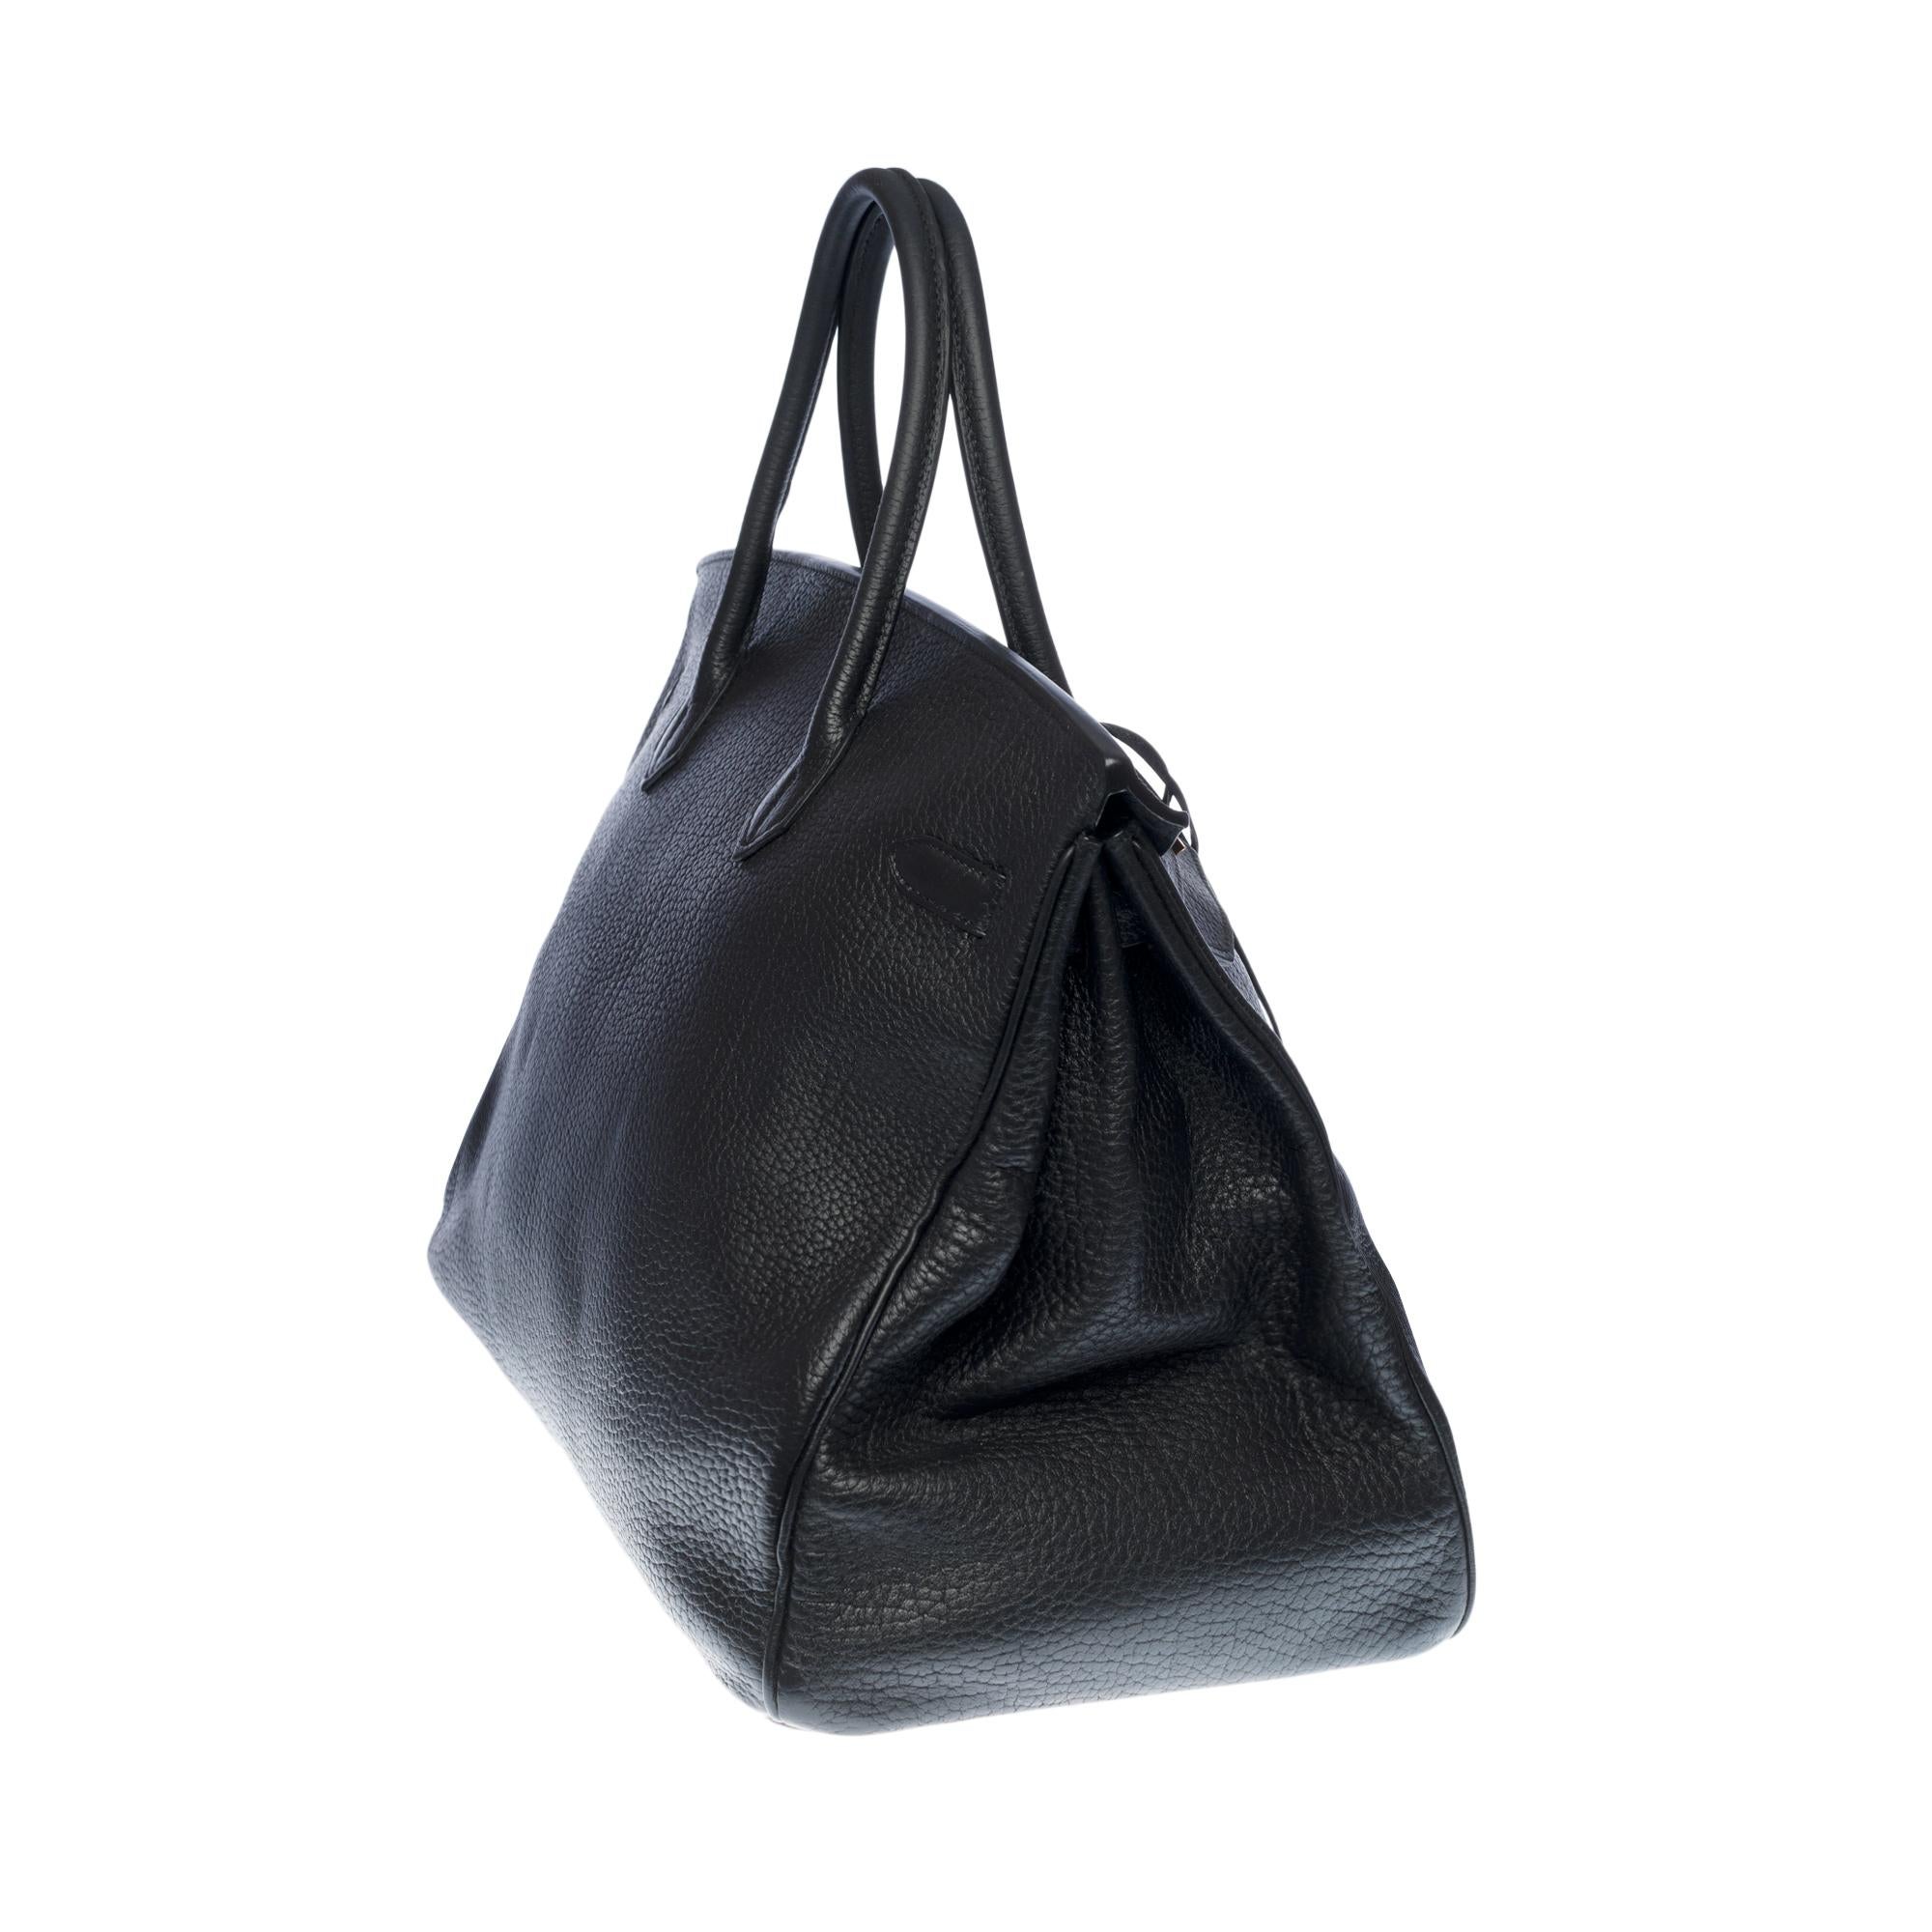 Women's or Men's Stunning Hermes Birkin 40cm handbag in Black Togo leather, GHW